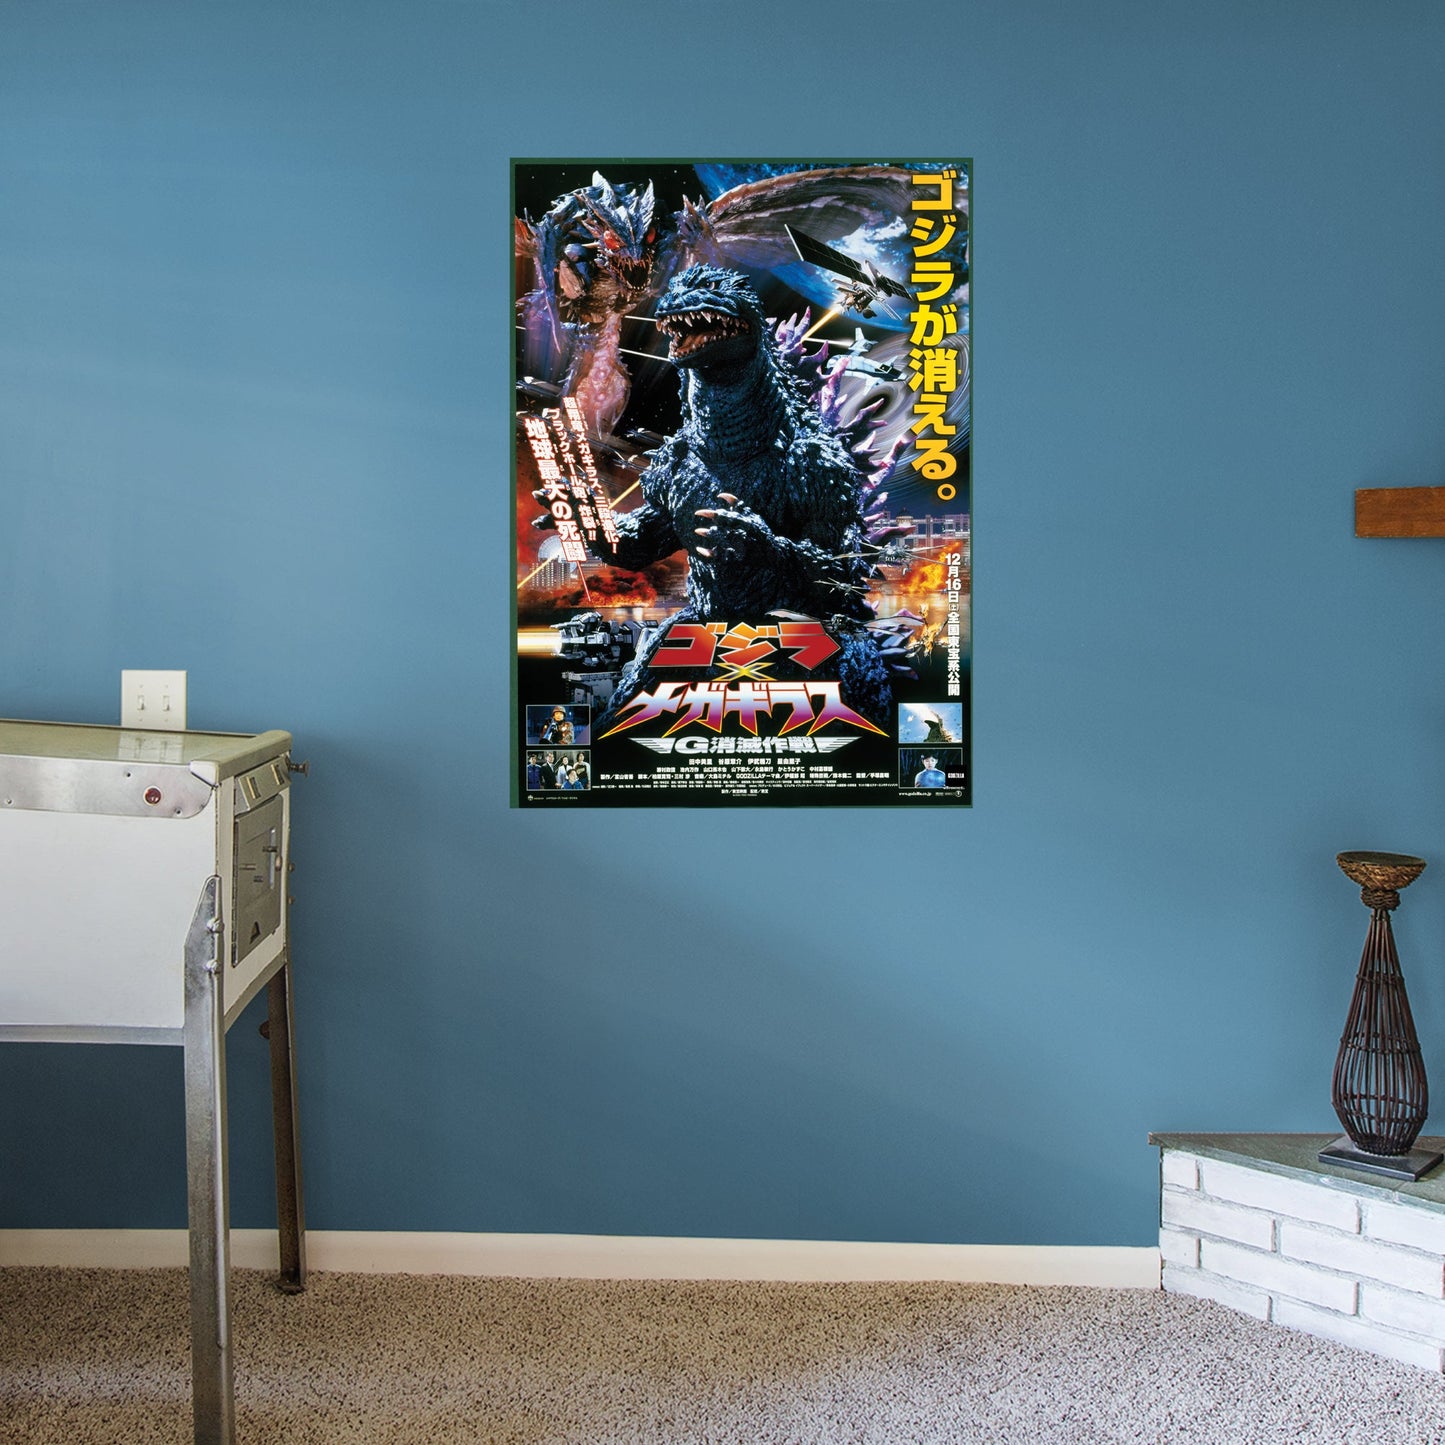 Godzilla: Godzilla vs Megaguirus (2000) Movie Poster Mural - Officially Licensed Toho Removable Adhesive Decal